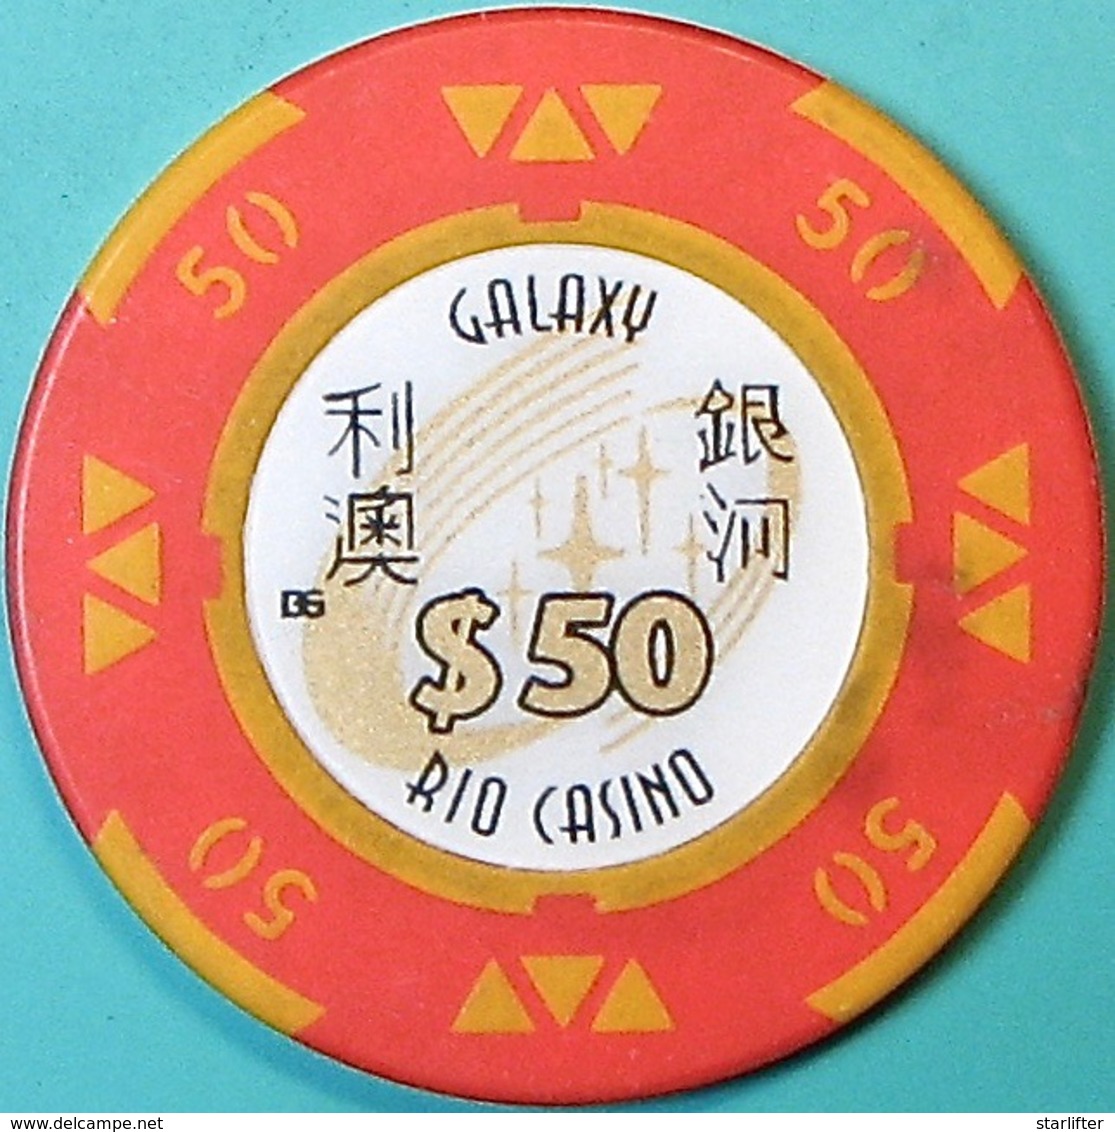 HK$50 Casino Chip. Galaxy Rio, Macau. Q04. - Casino